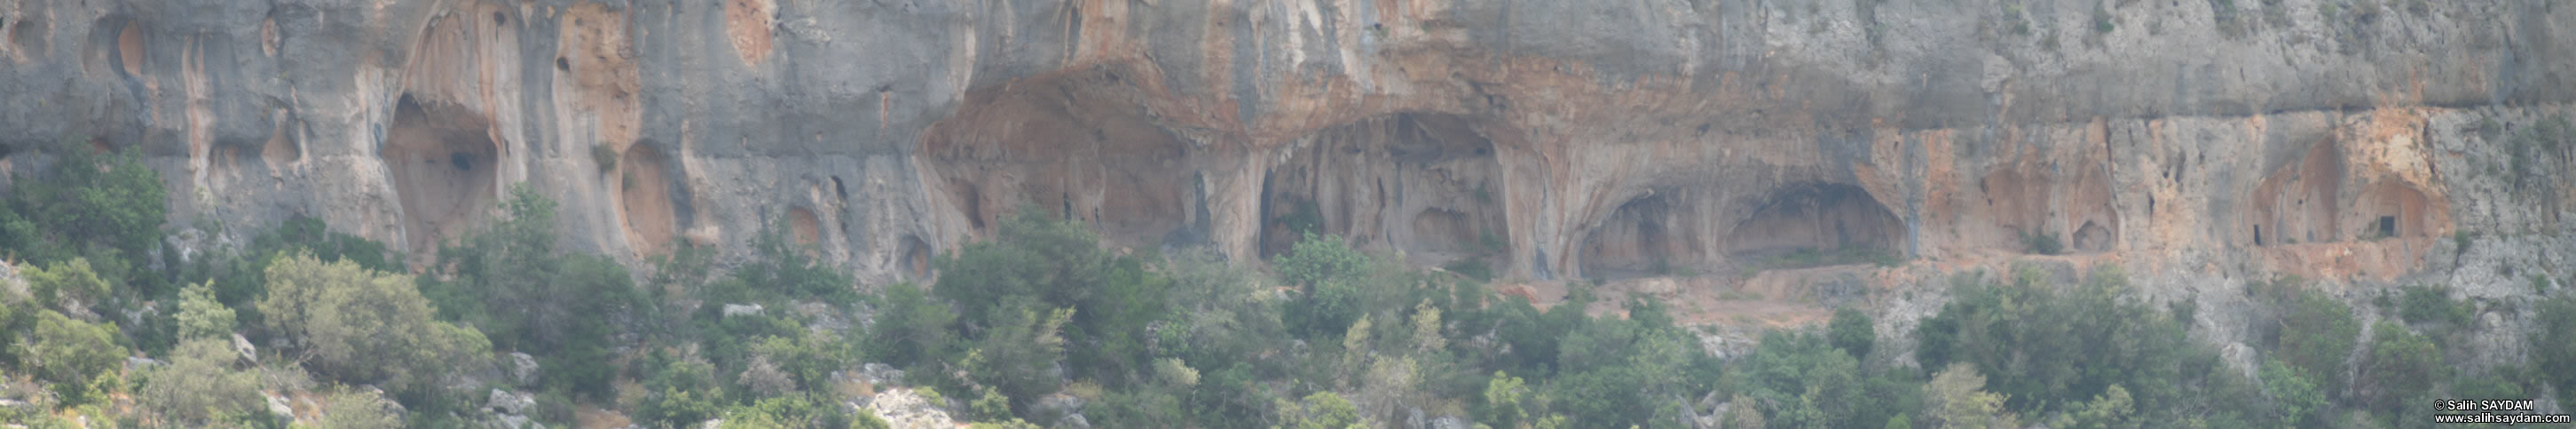 Sightings from Human Boulders (Adamkayalar) Panorama 1 (Mersin, Erdemli)